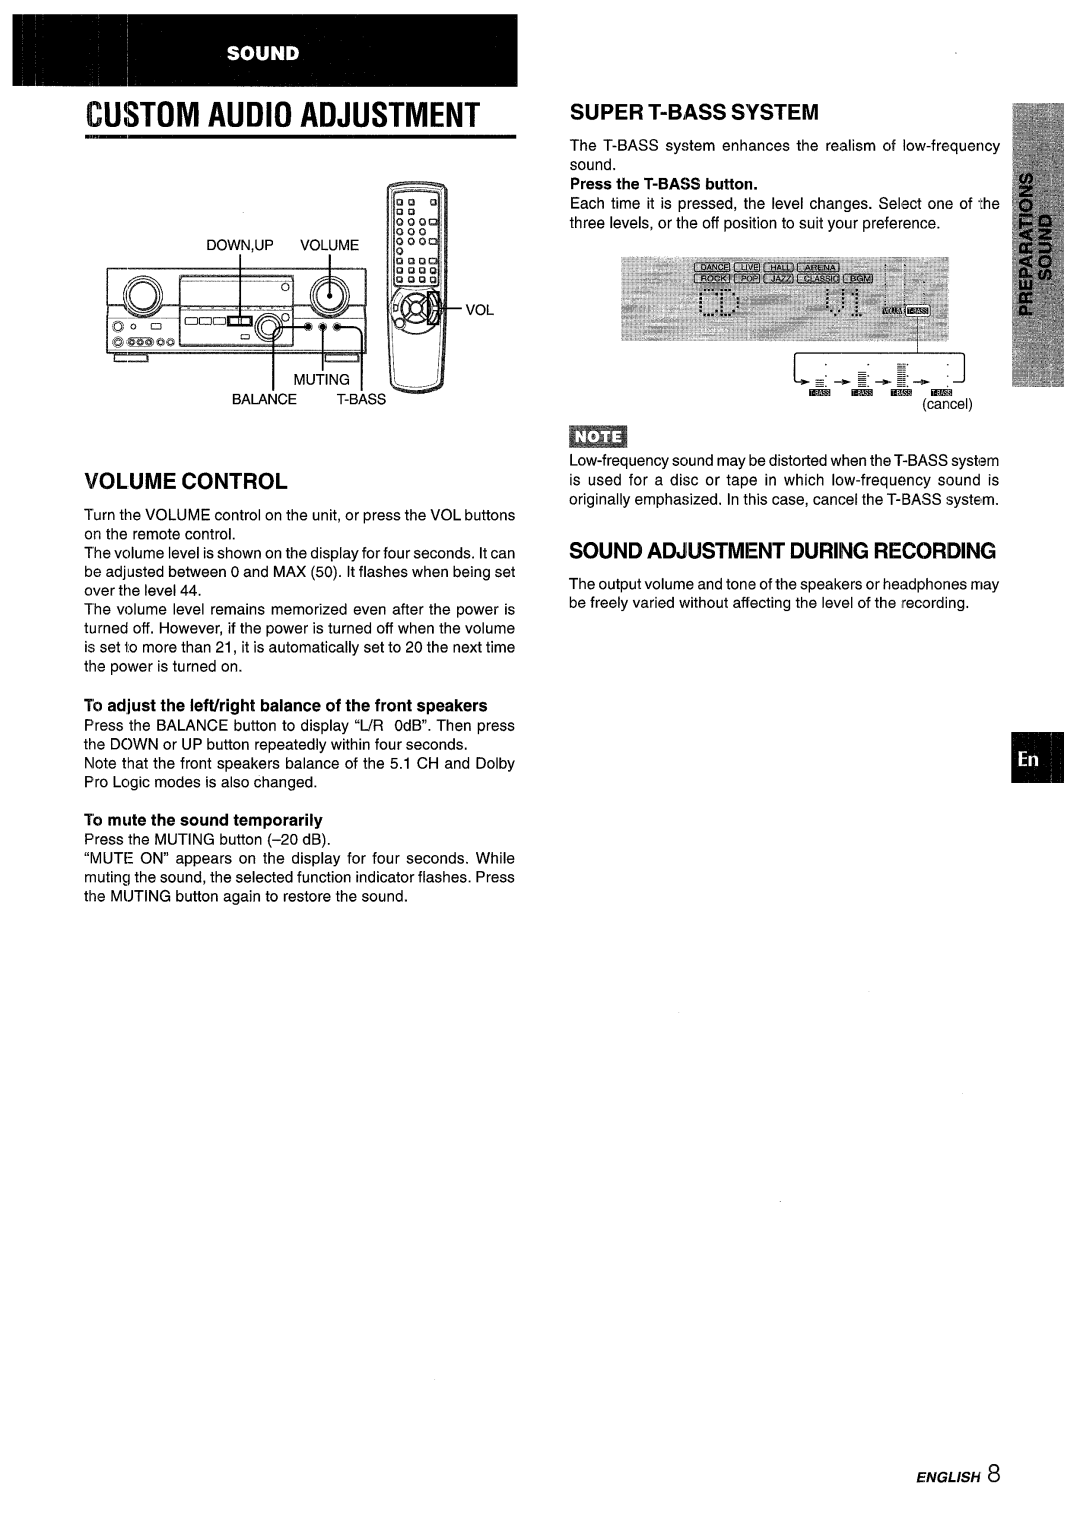 Aiwa AV-D55 manual Super T-Bass System, Volume Control, Sound Adjustment During Recording 